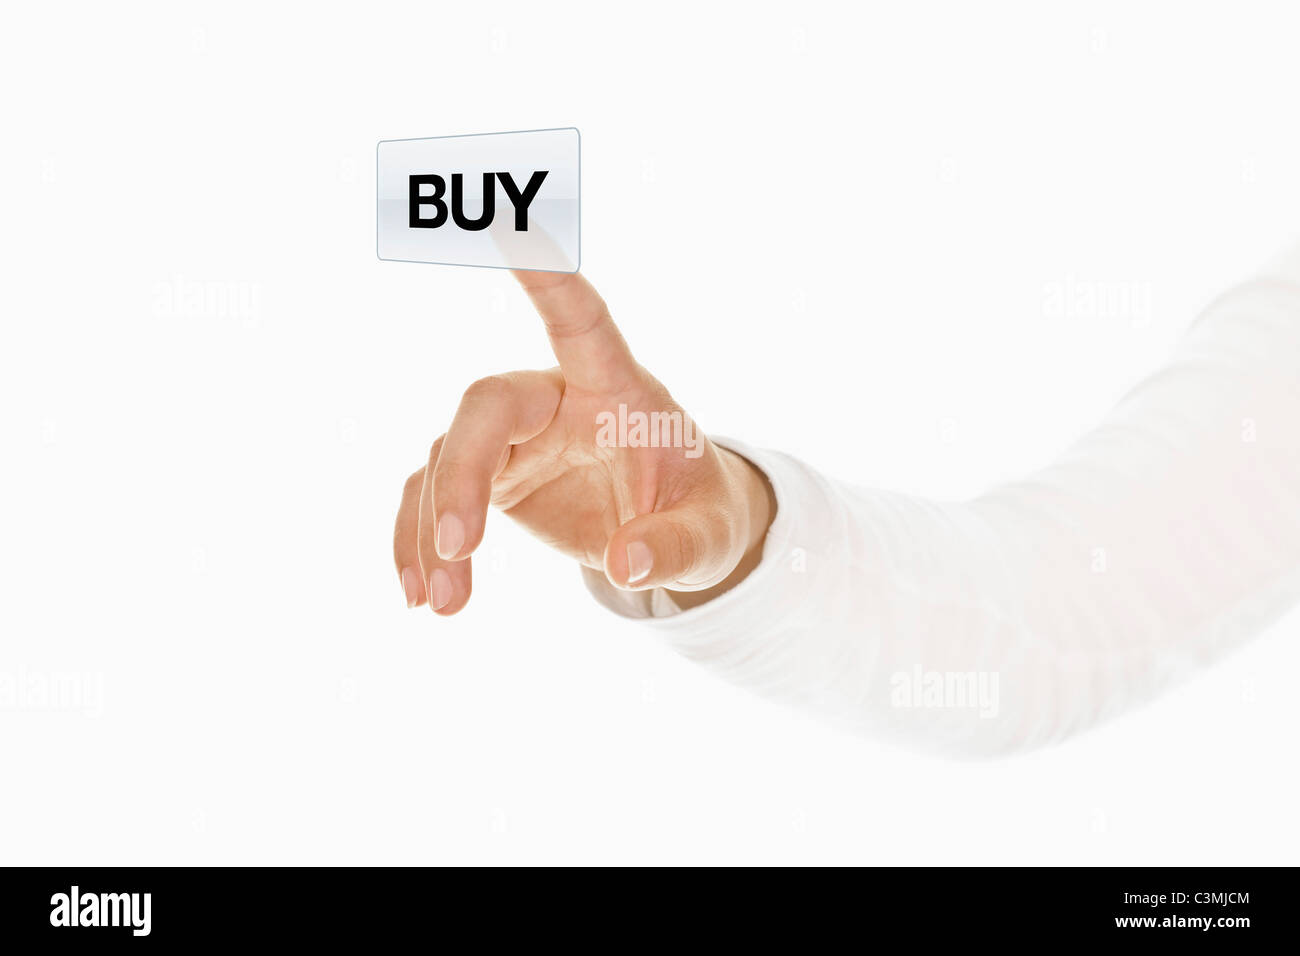 Human hand touching buy button Stock Photo